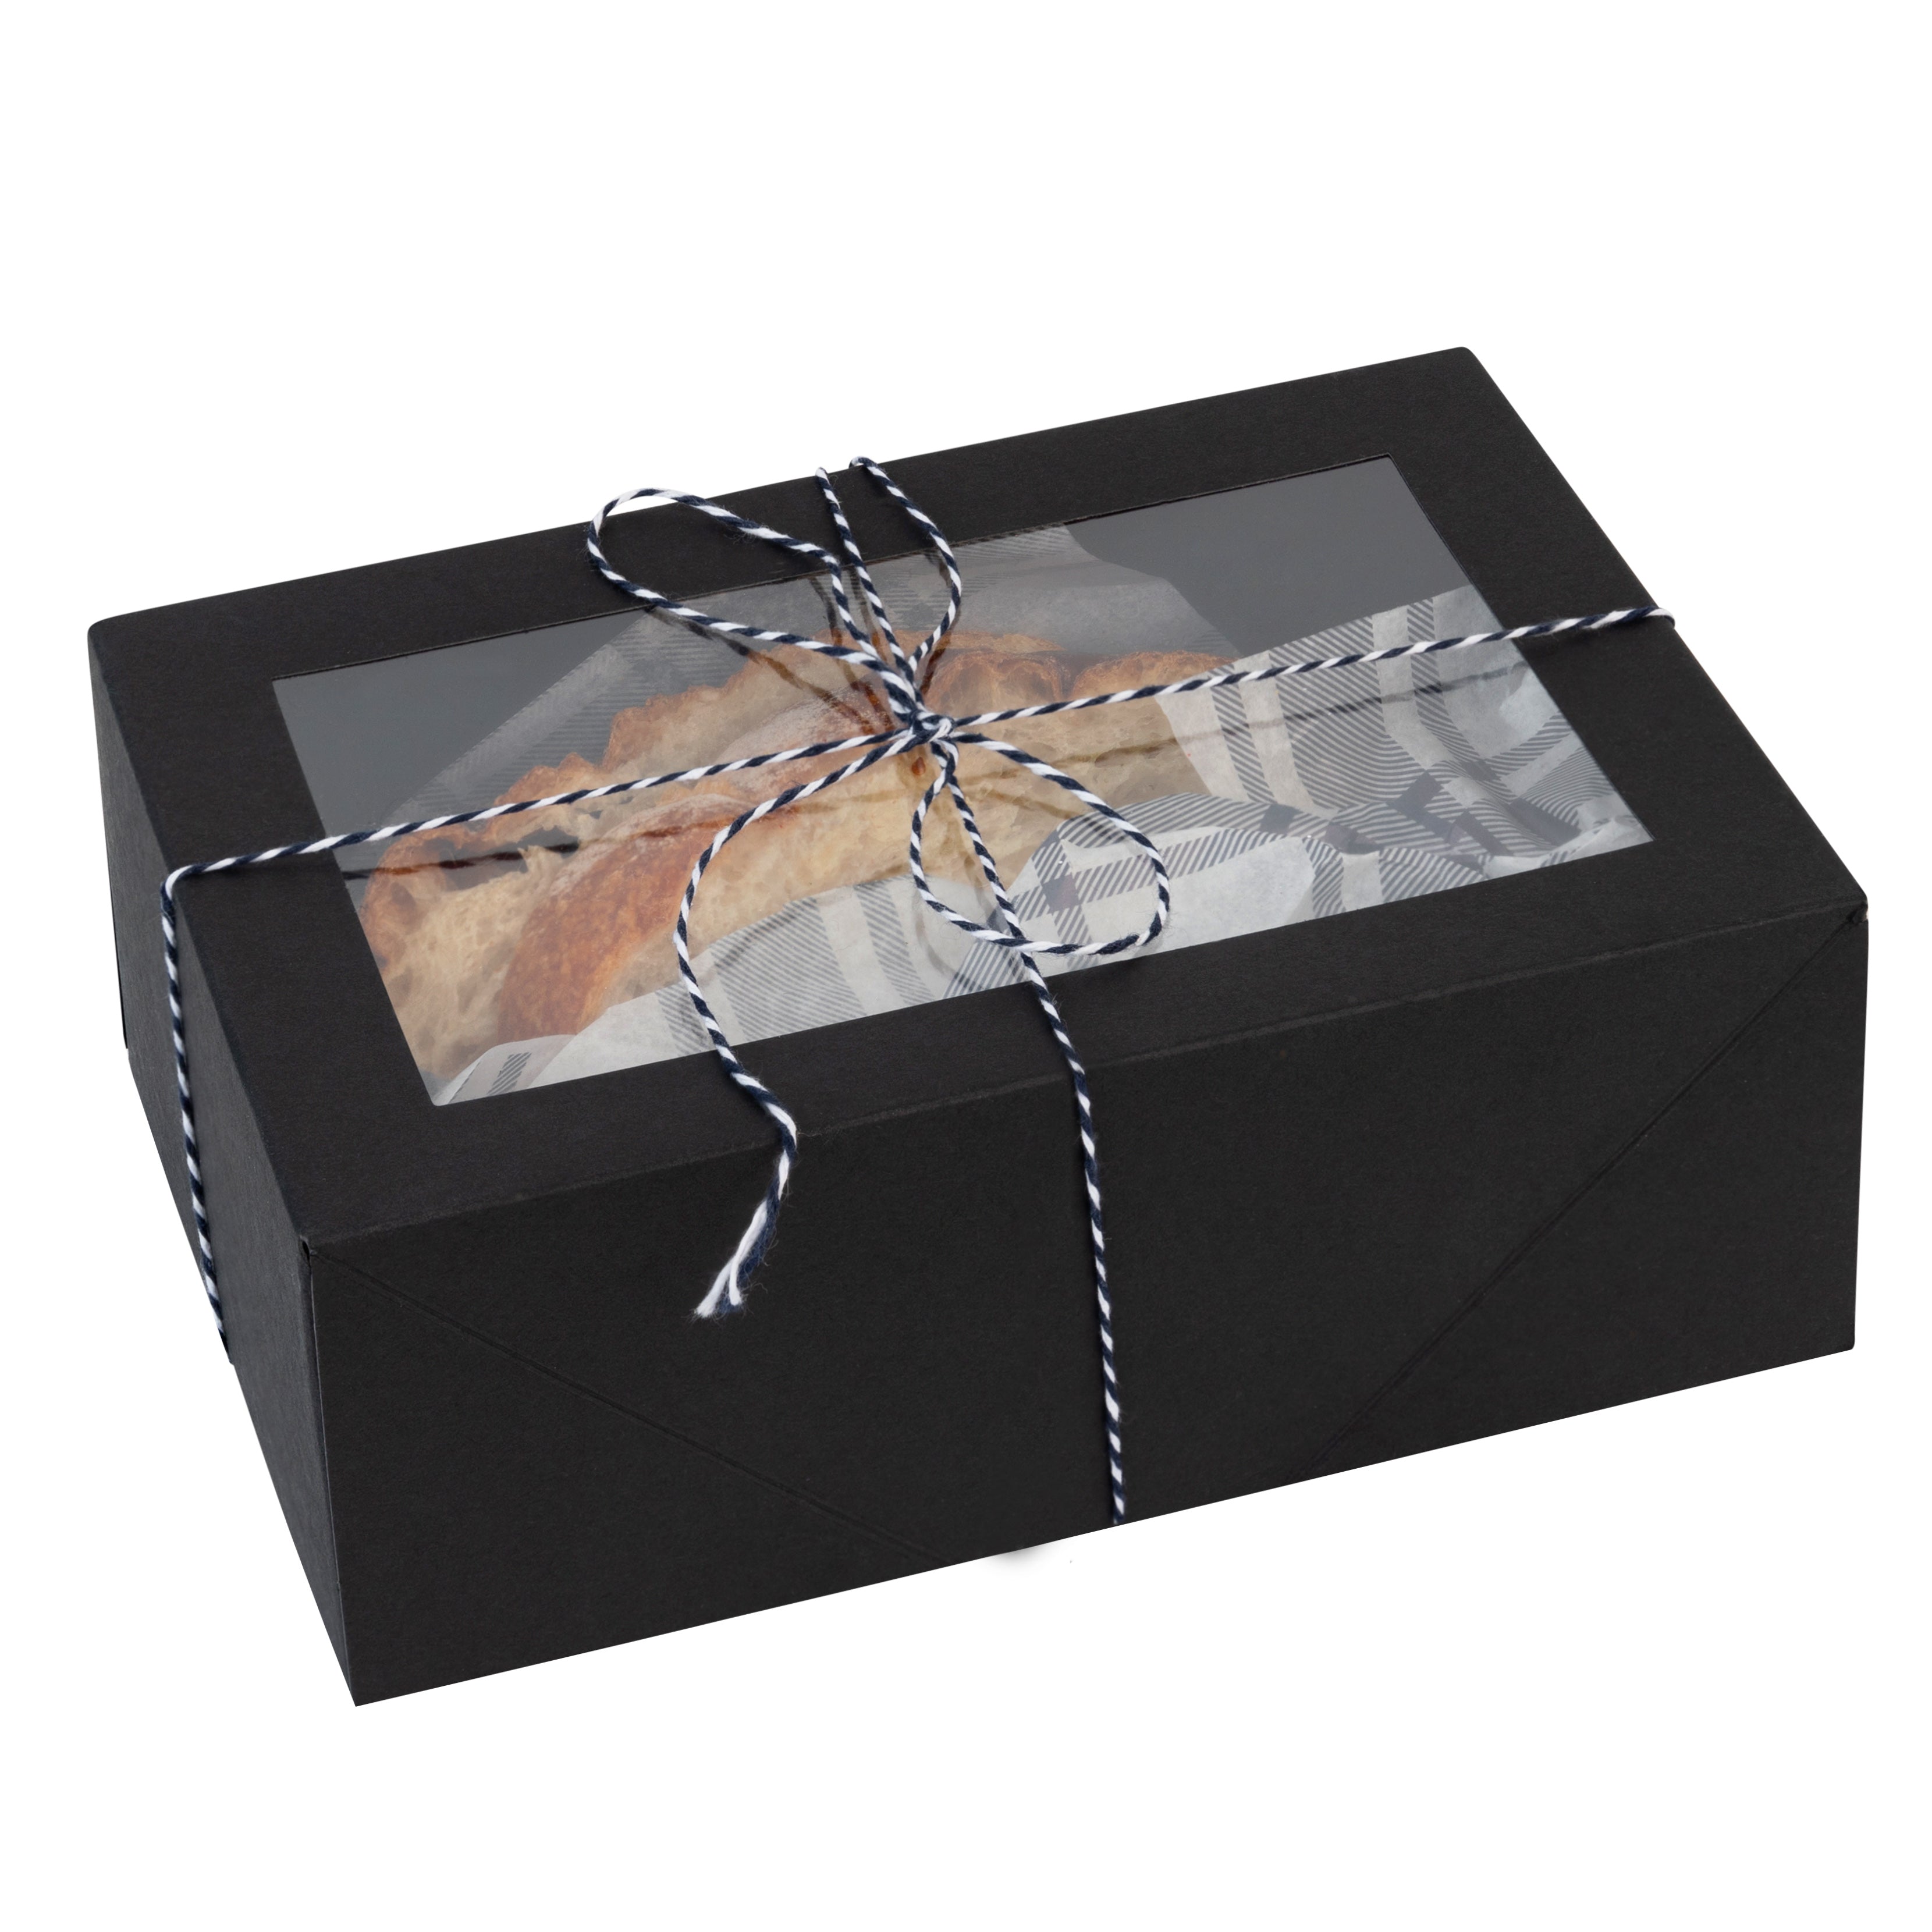 LOG CAKE/DELI CONTAINER - 14 x 7 - LONG RECTANGULAR BLACK BASE